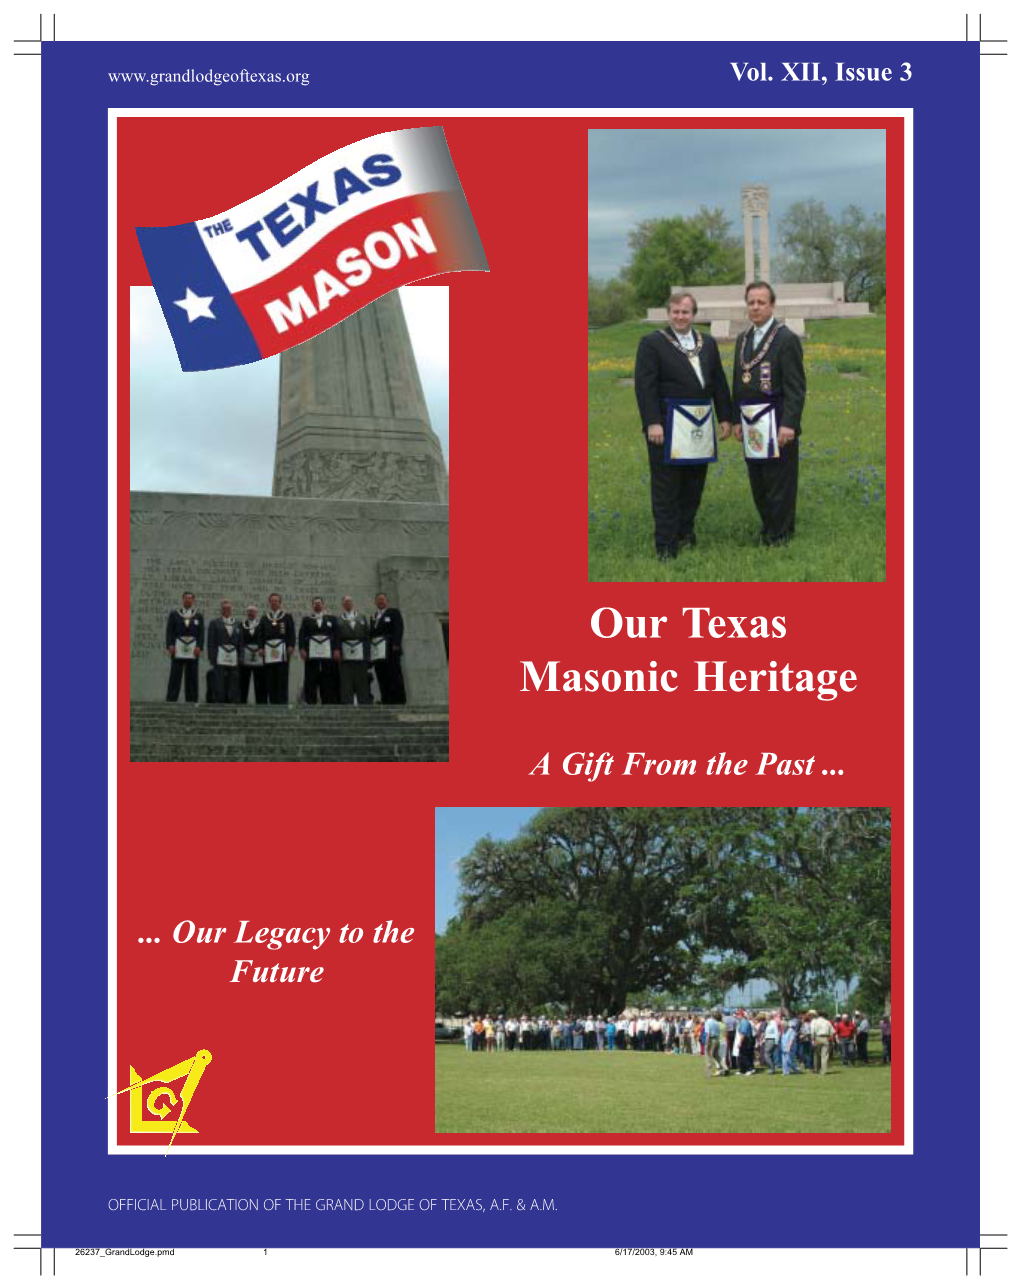 Our Texas Masonic Heritage